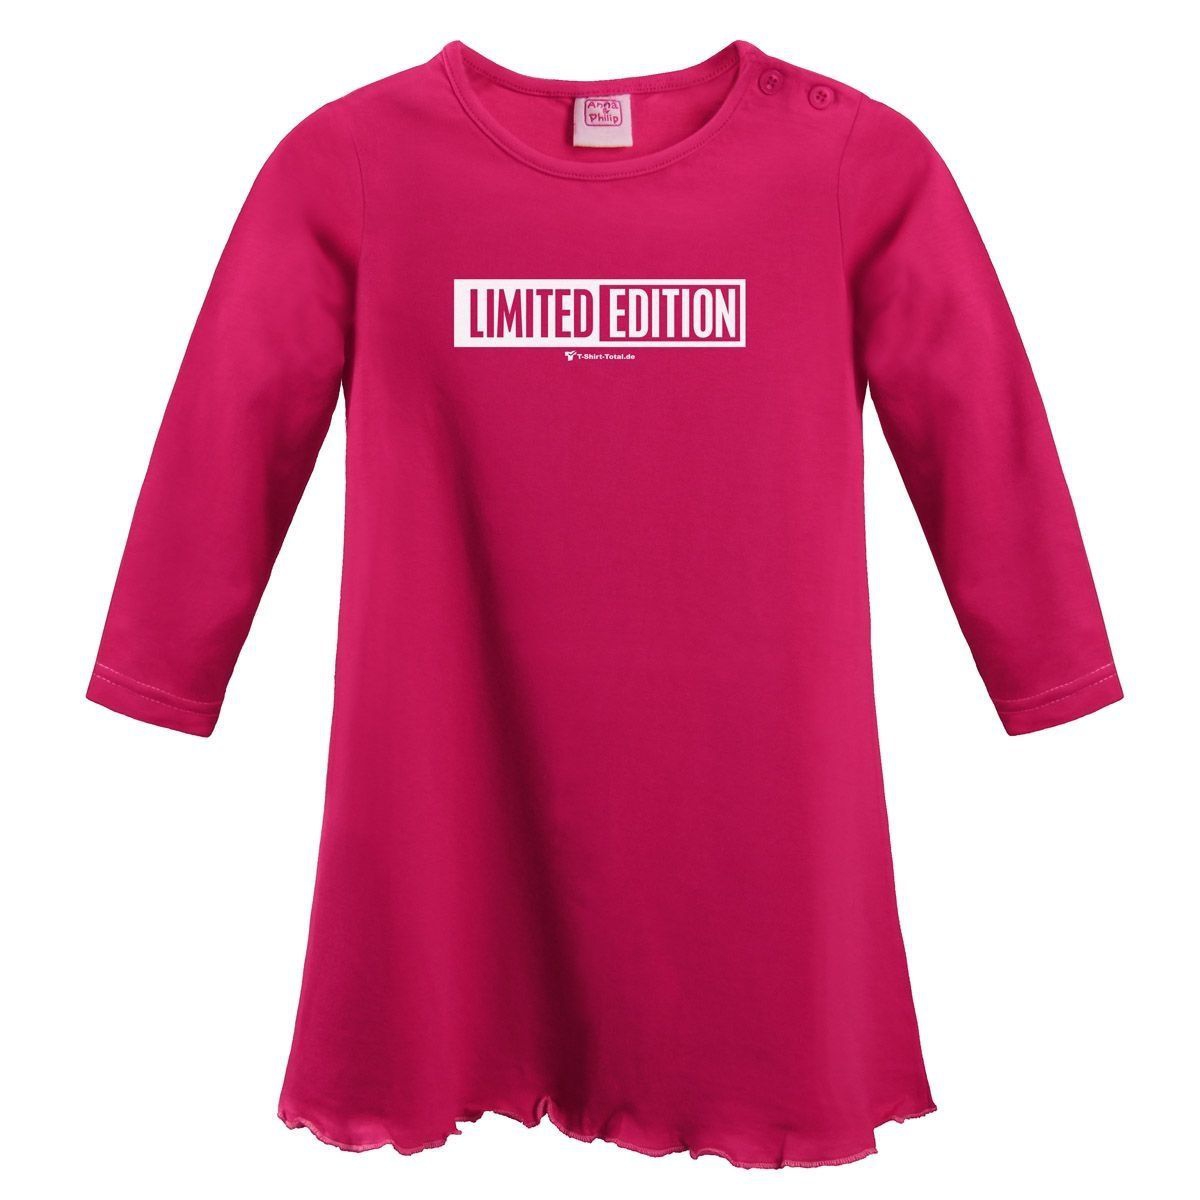 Limited Edition Nachtkleid pink 134 / 140